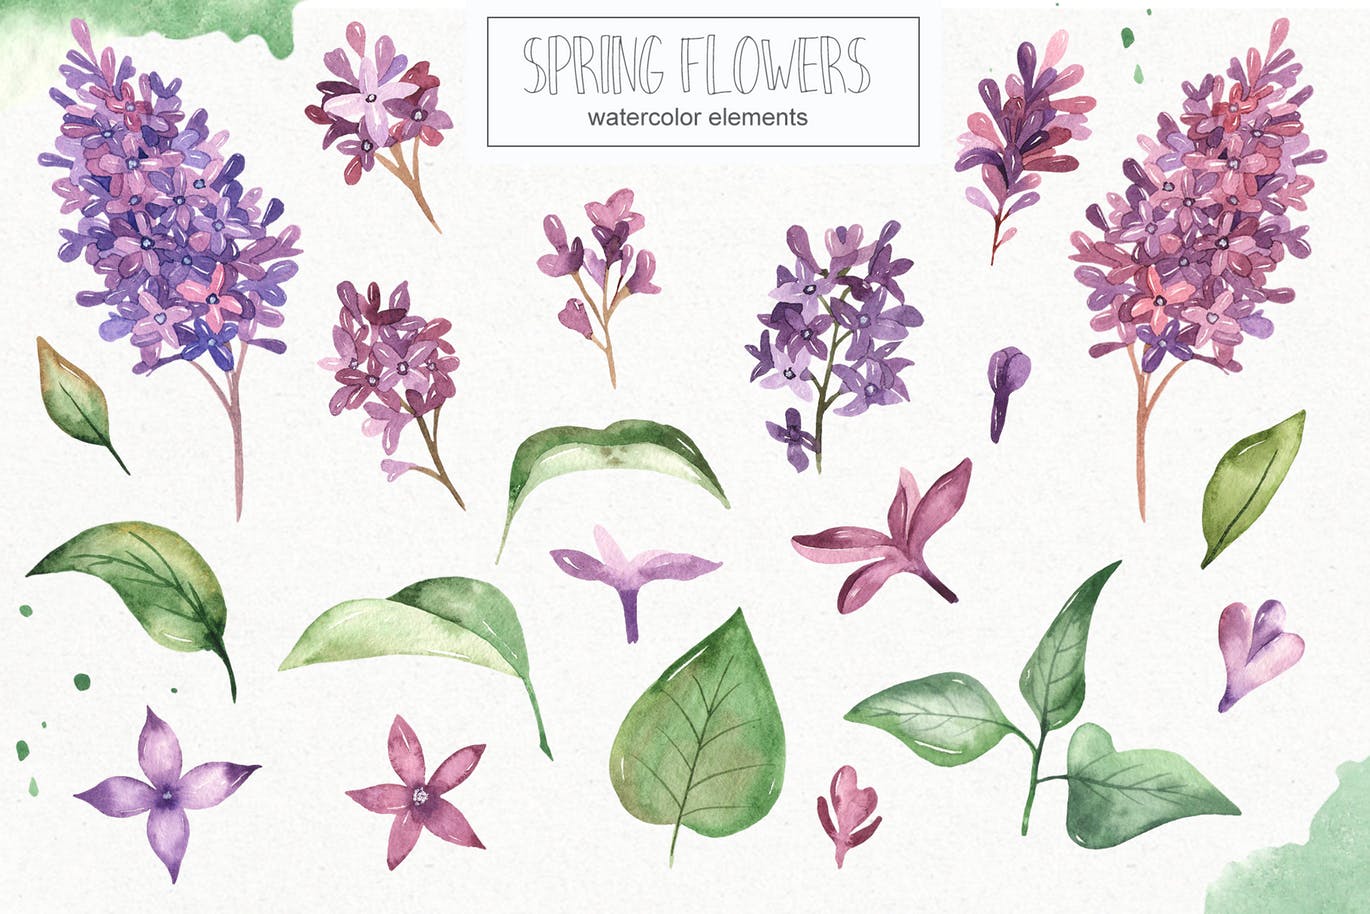 春季花卉水彩素材套装 Watercolor spring flowers collection插图1